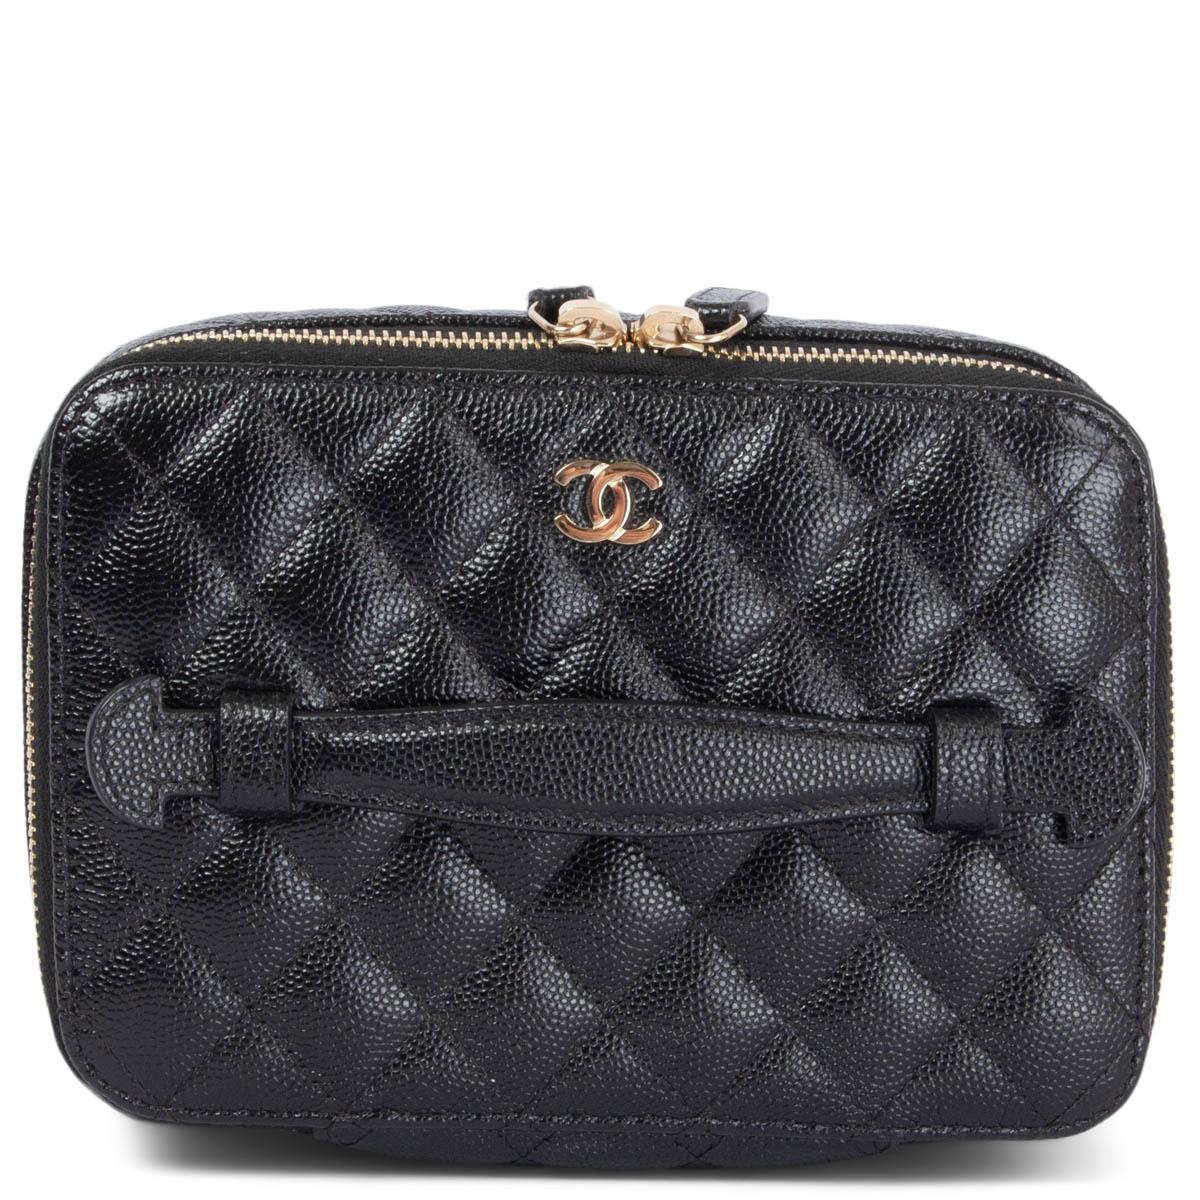 CHANEL black Caviar leather 2020 20C JEWELLERY CASE Bag 1